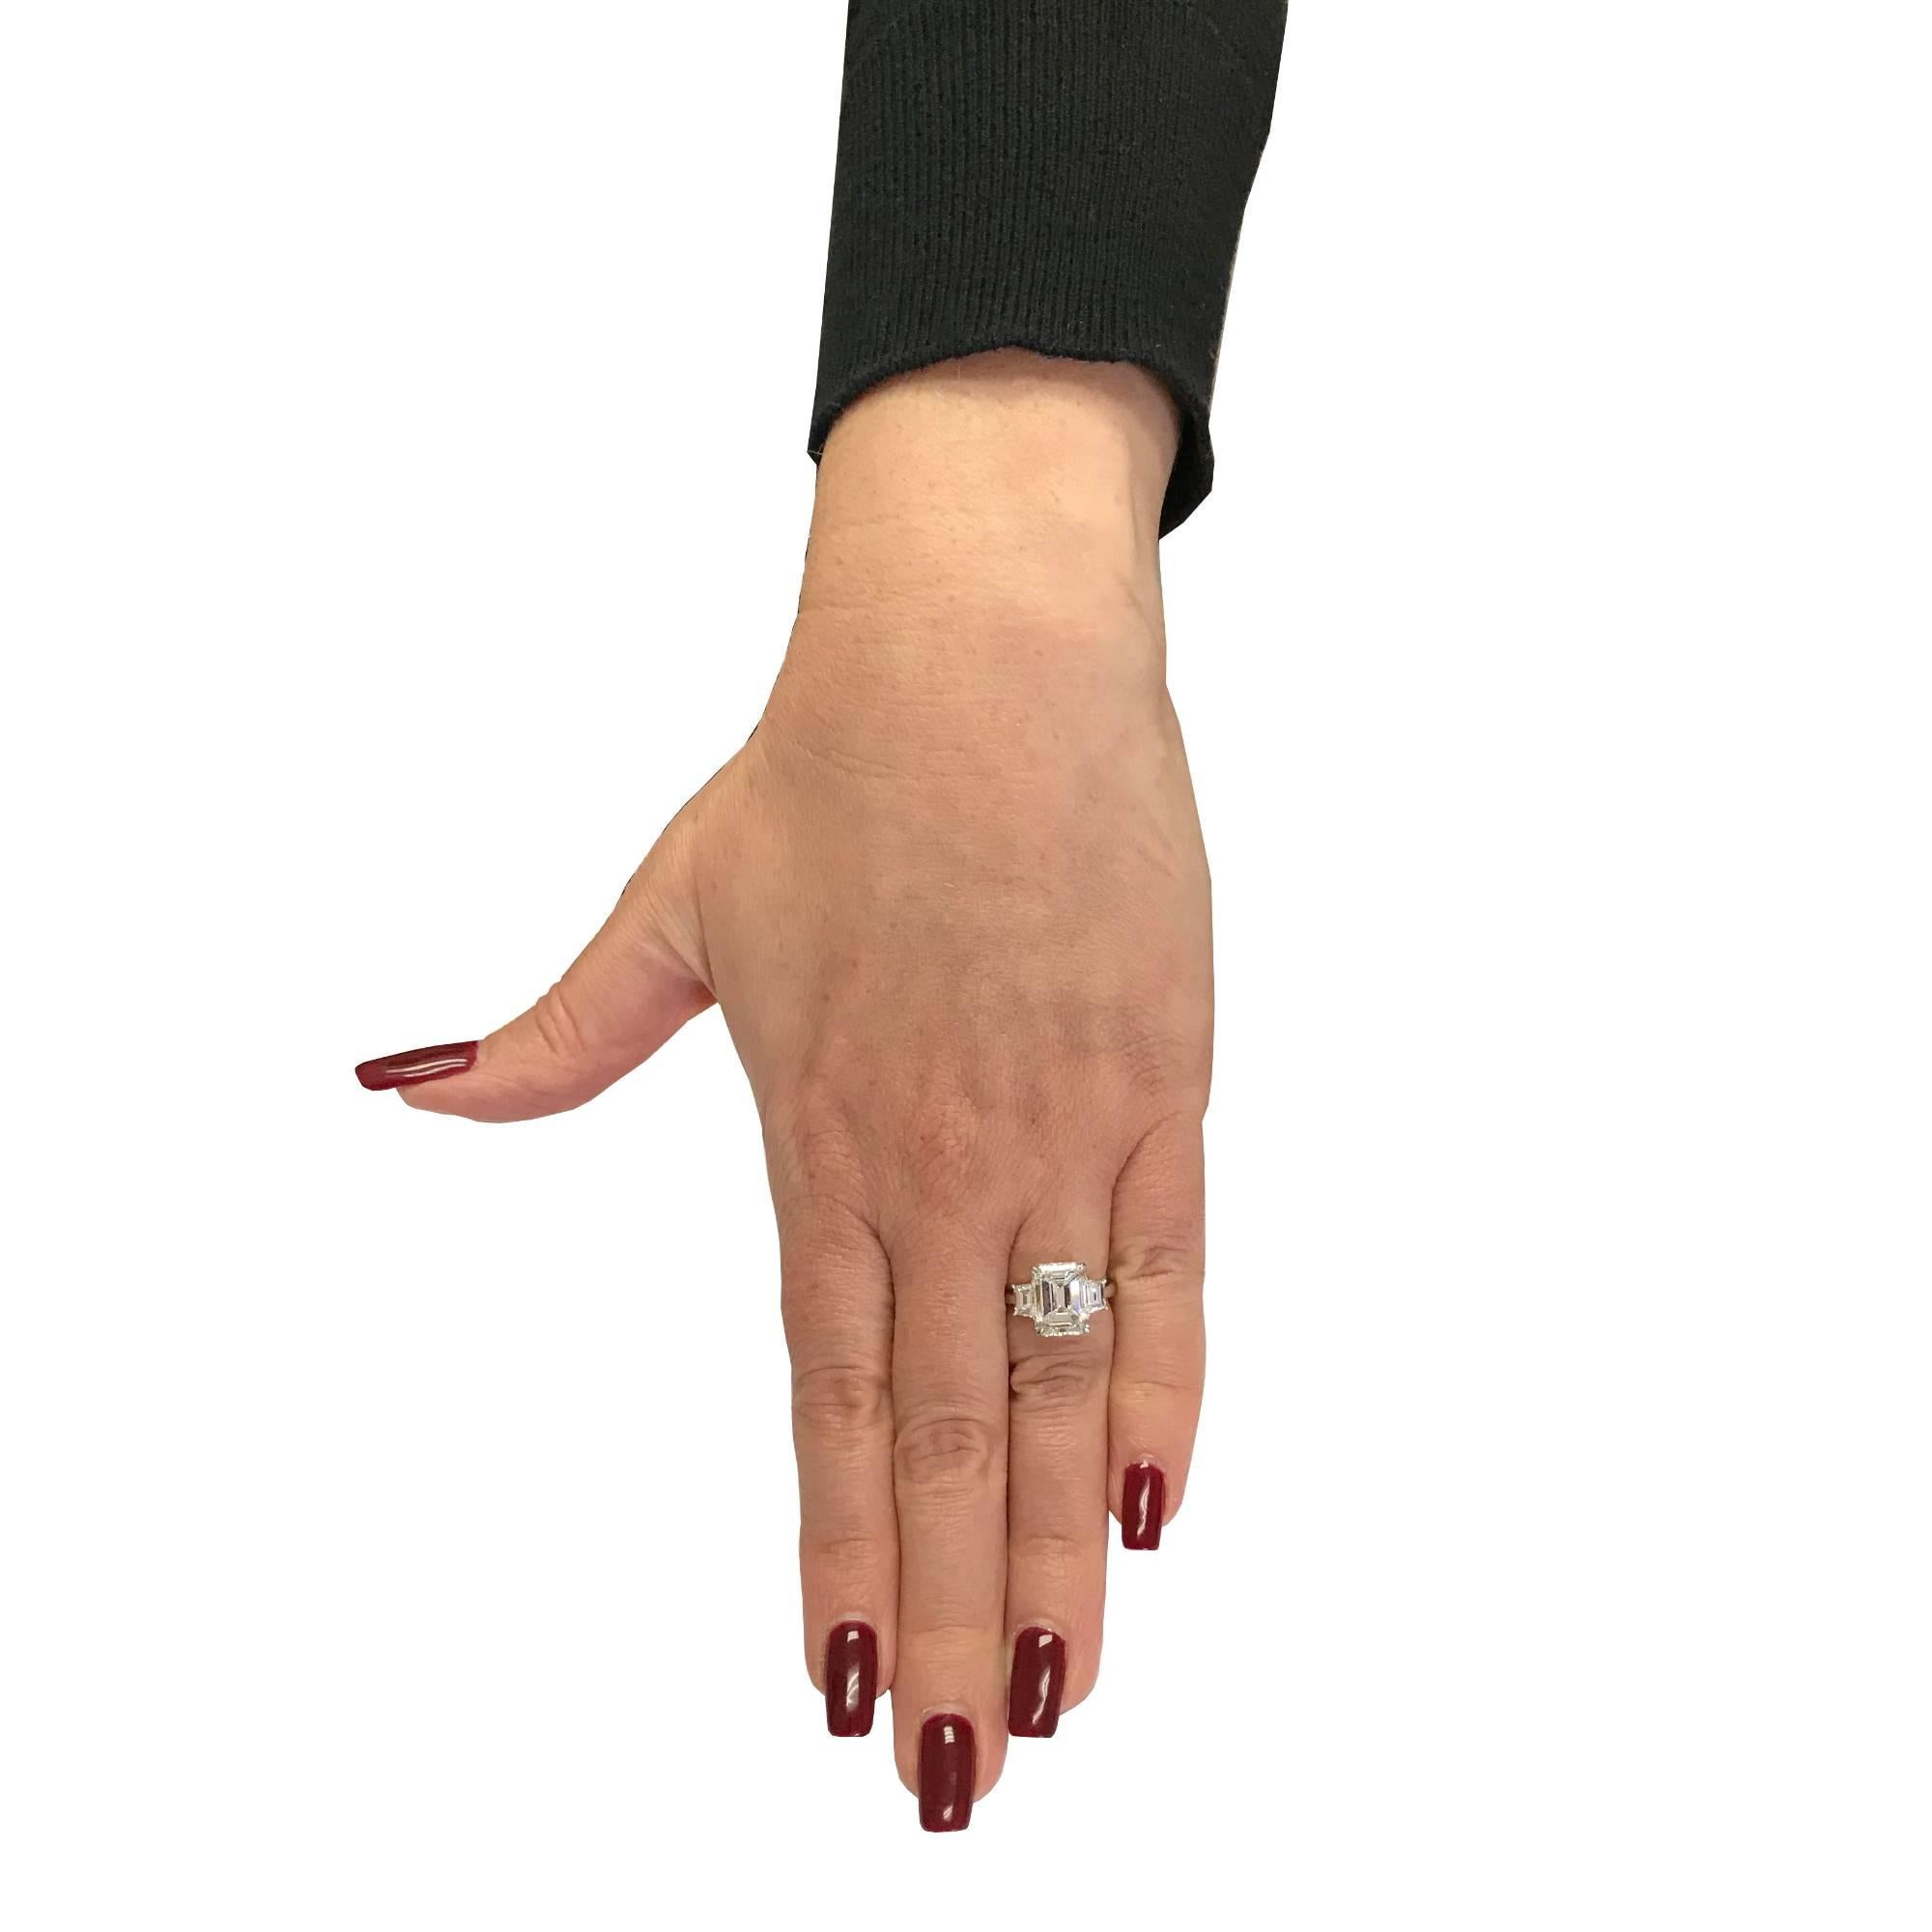 Modern 3.74 Carat Emerald Cut Diamond GIA Graded Engagement Ring